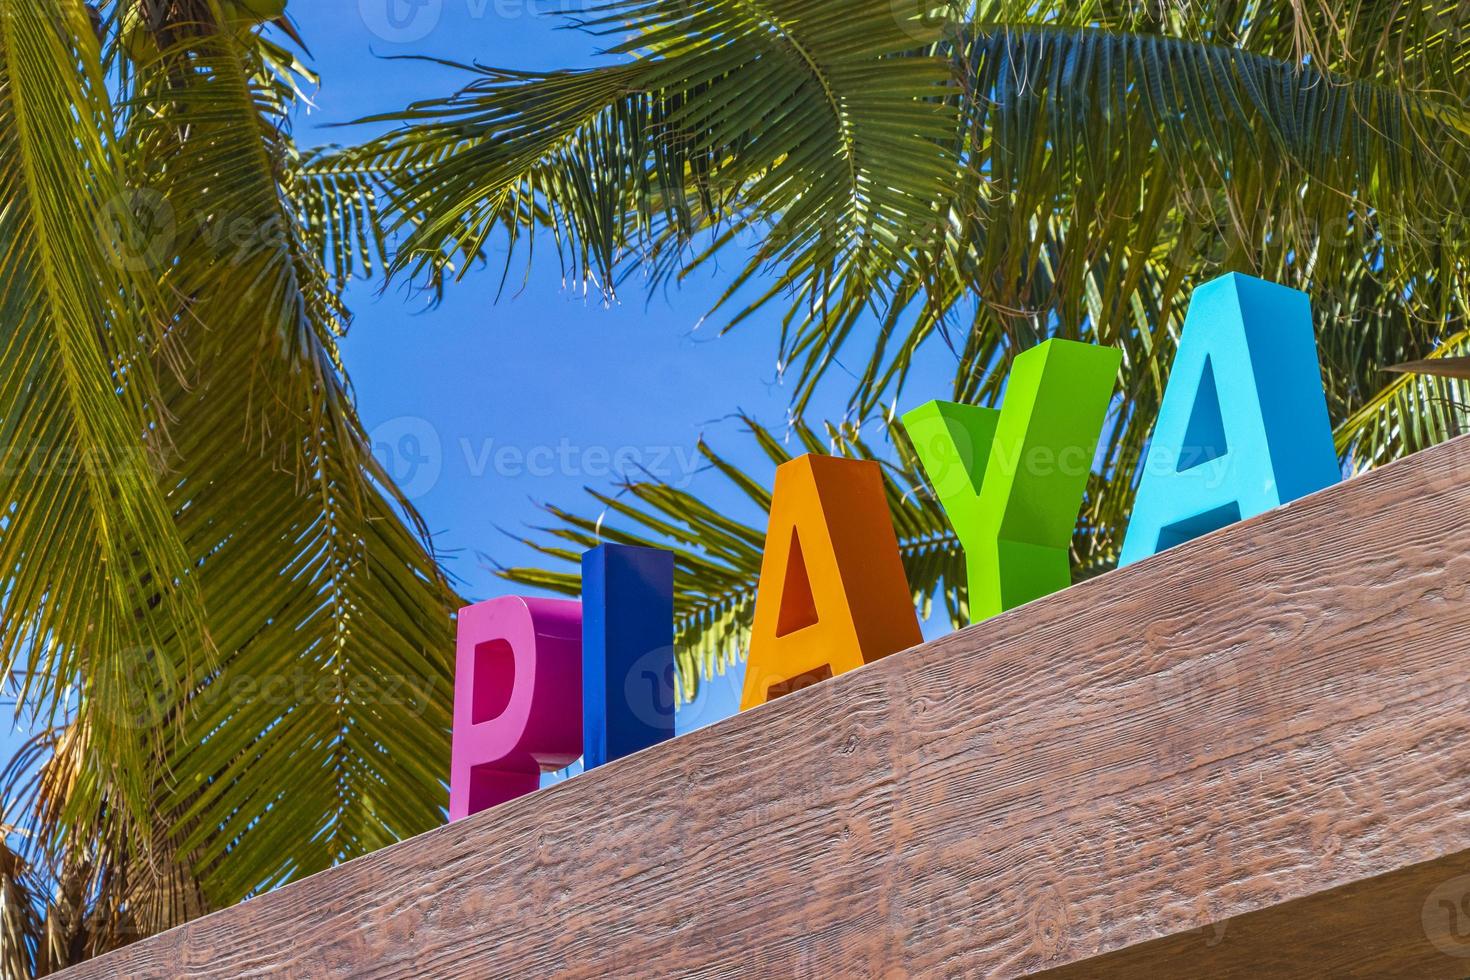 Playa del Carmn Quintana Roo Mexico  2022 Colorful Playa del Carmen lettering sign symbol on beach Mexico. photo